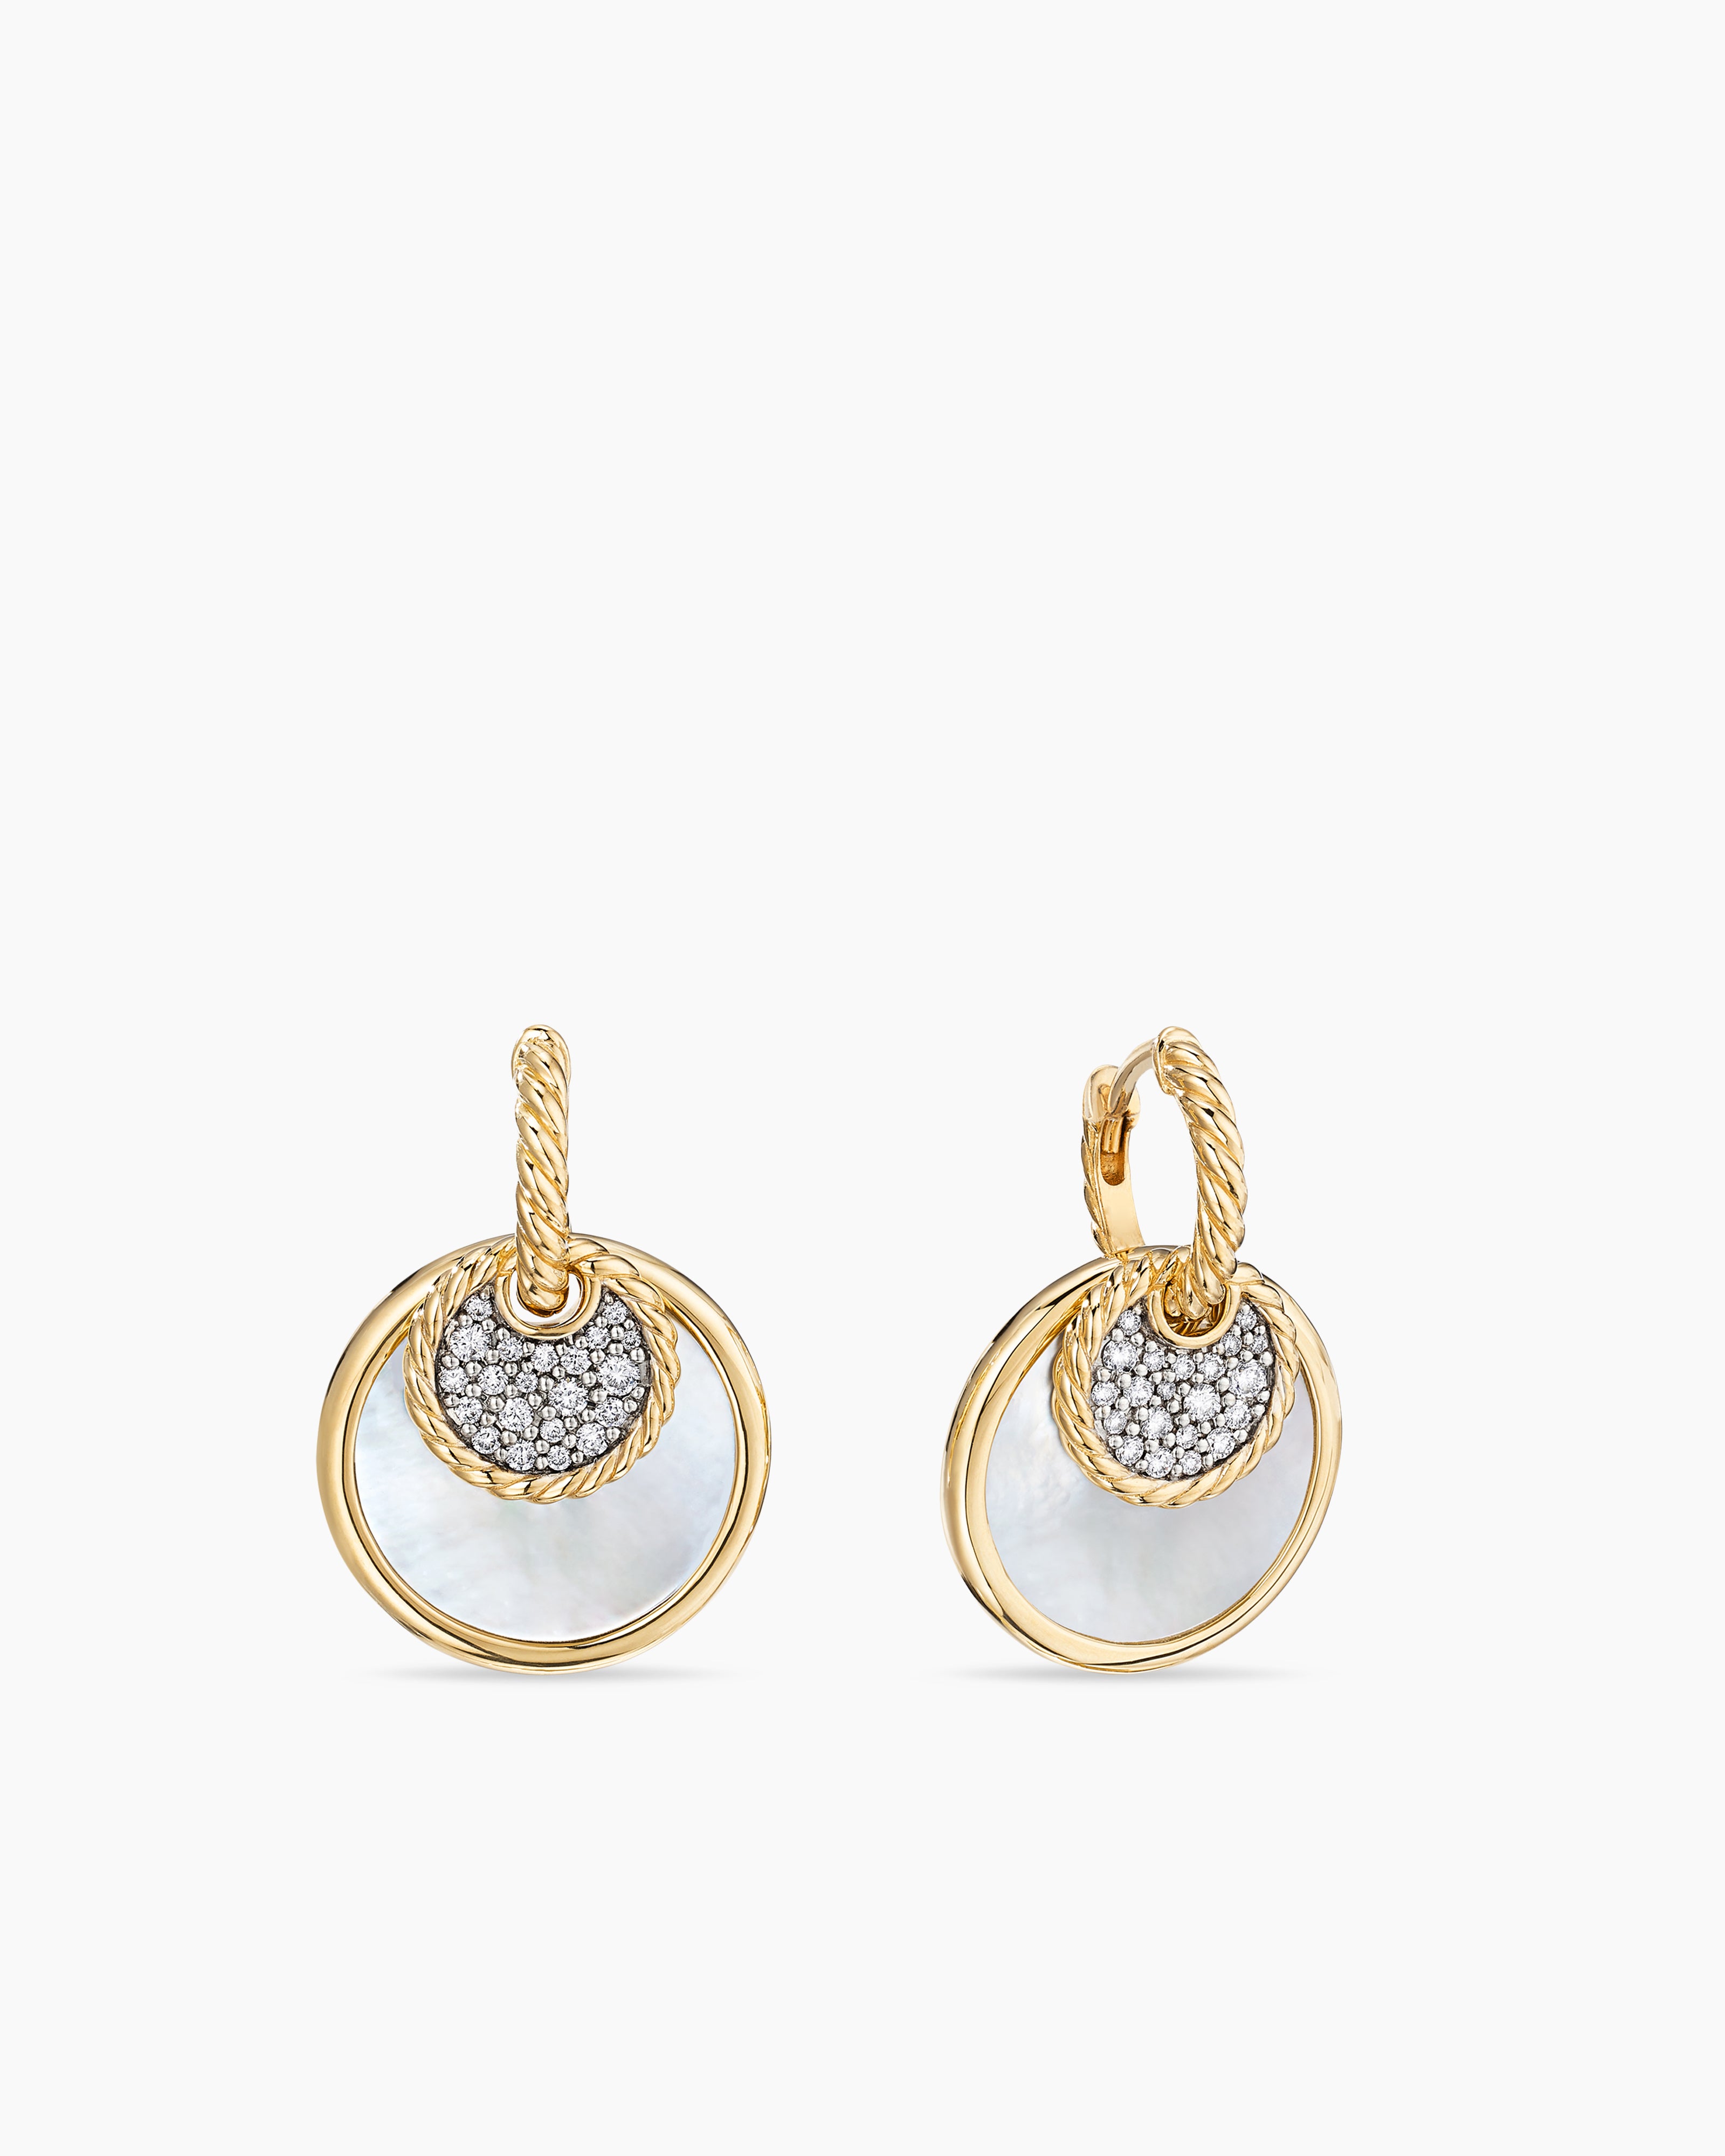 18ct White Gold Diamond Stud Earrings | Cerrone Jewellers